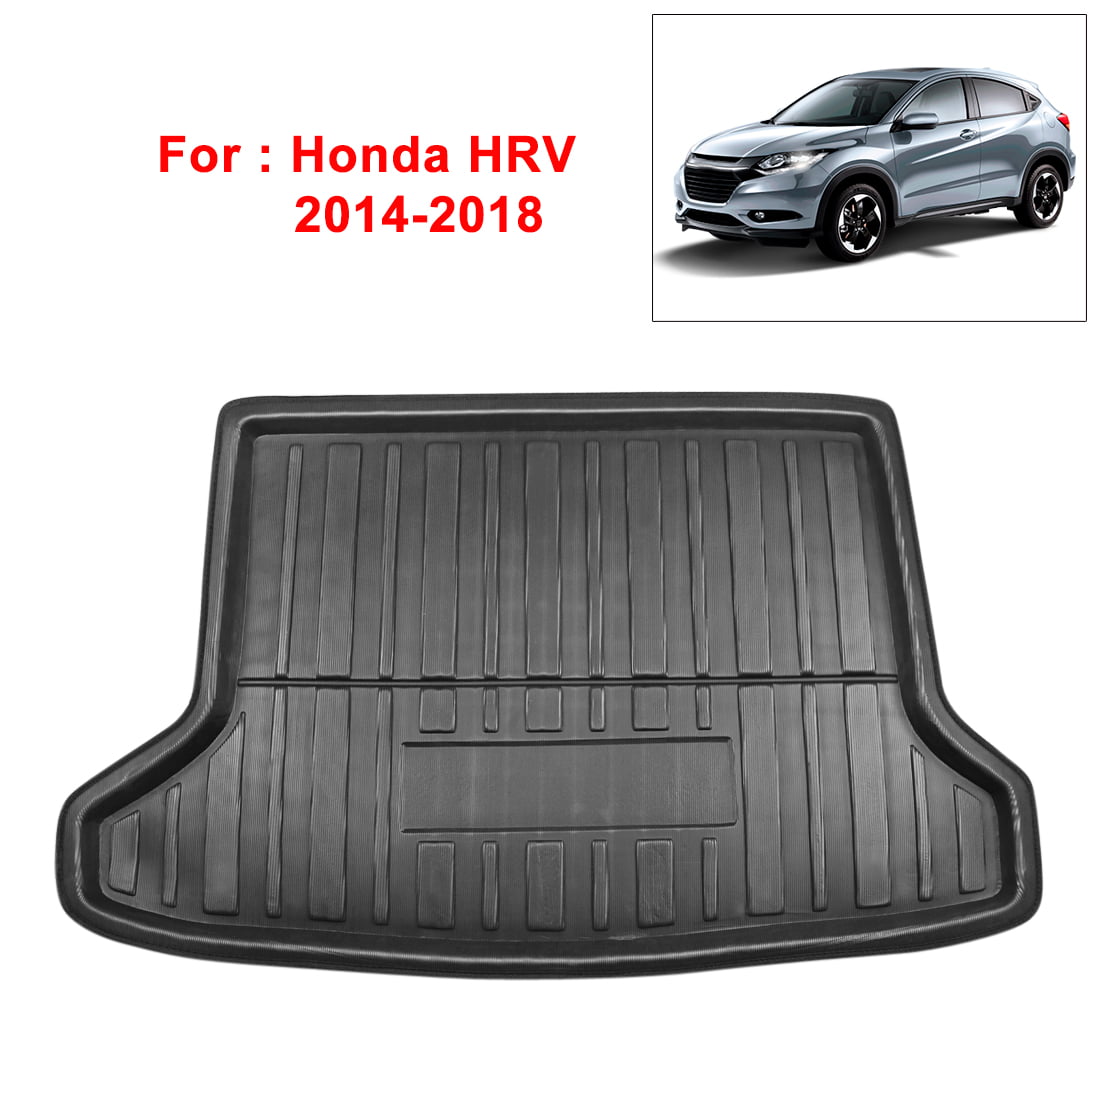 Rear Trunk Liner Cargo Tray Mat Cover Black For Honda Accord Sedan 2013-2016 